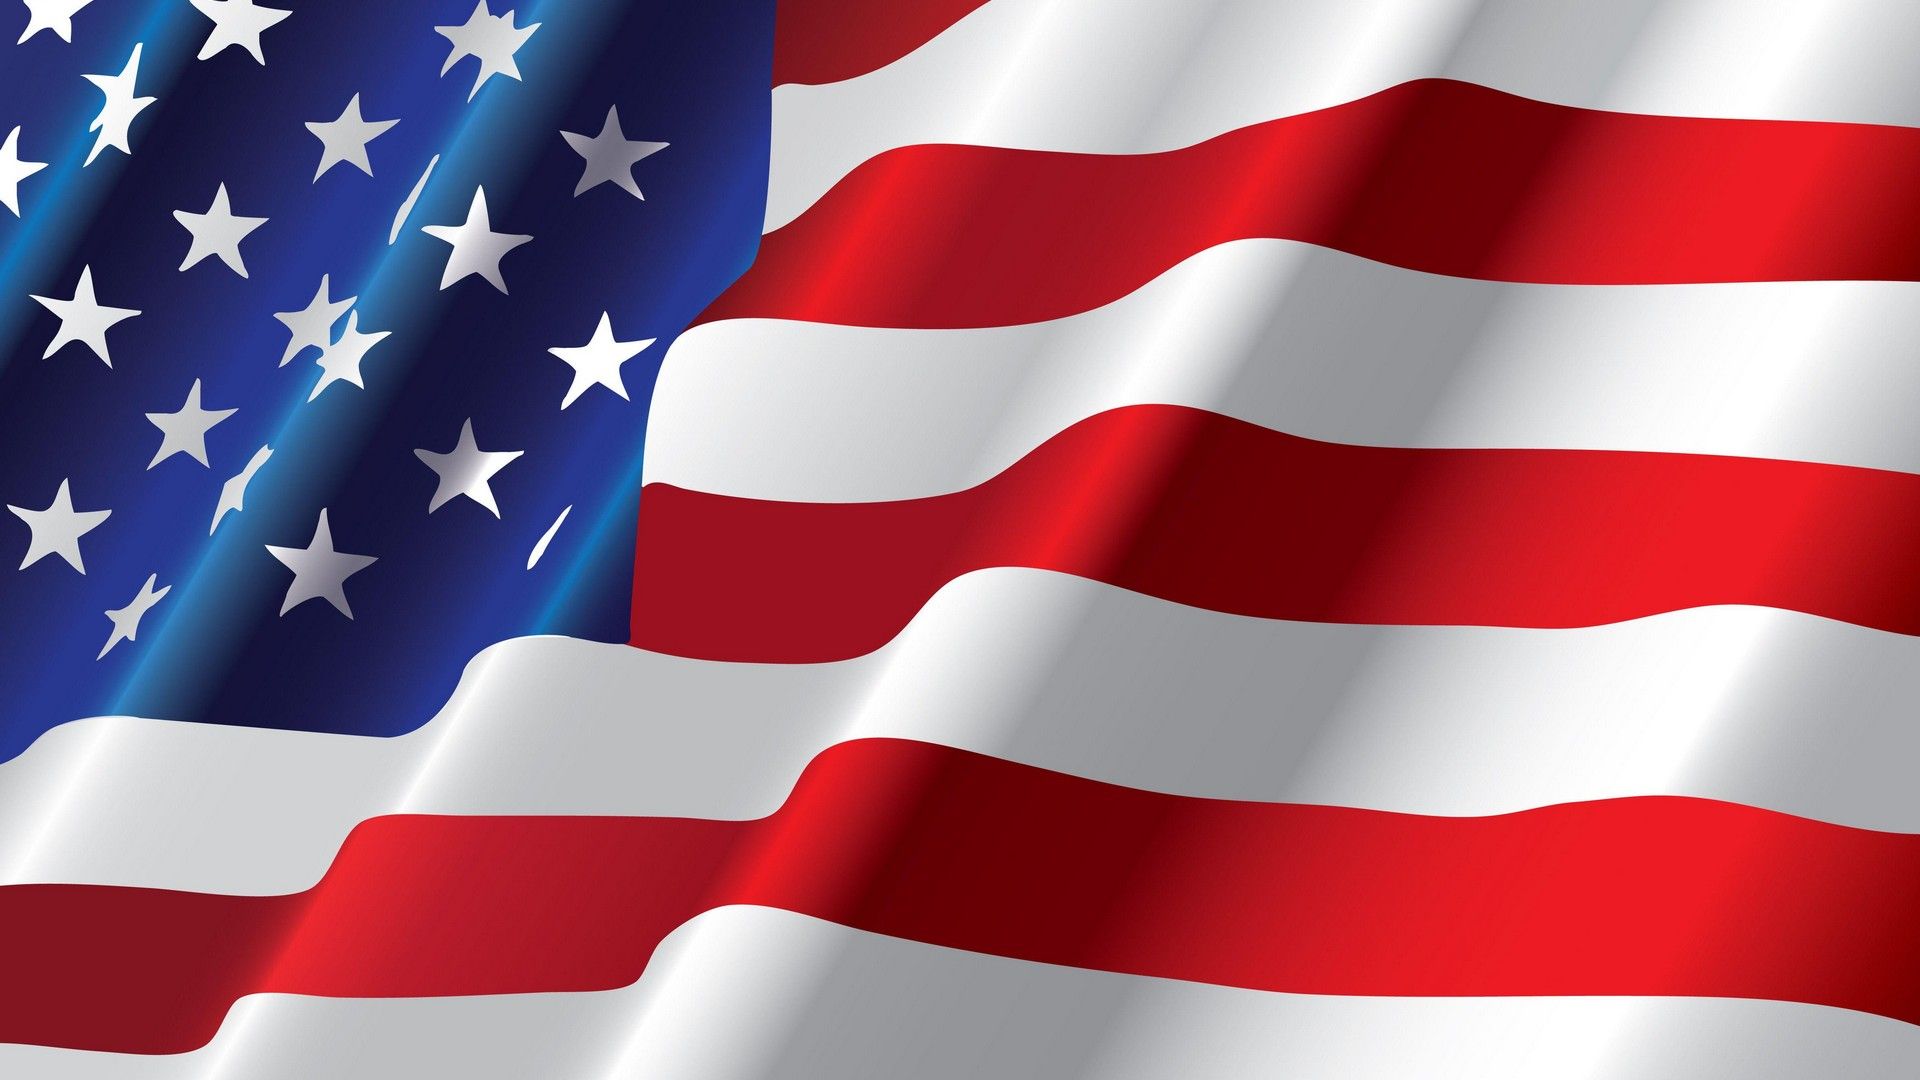 Wallpaper American Flag HD. American flag image, American flag